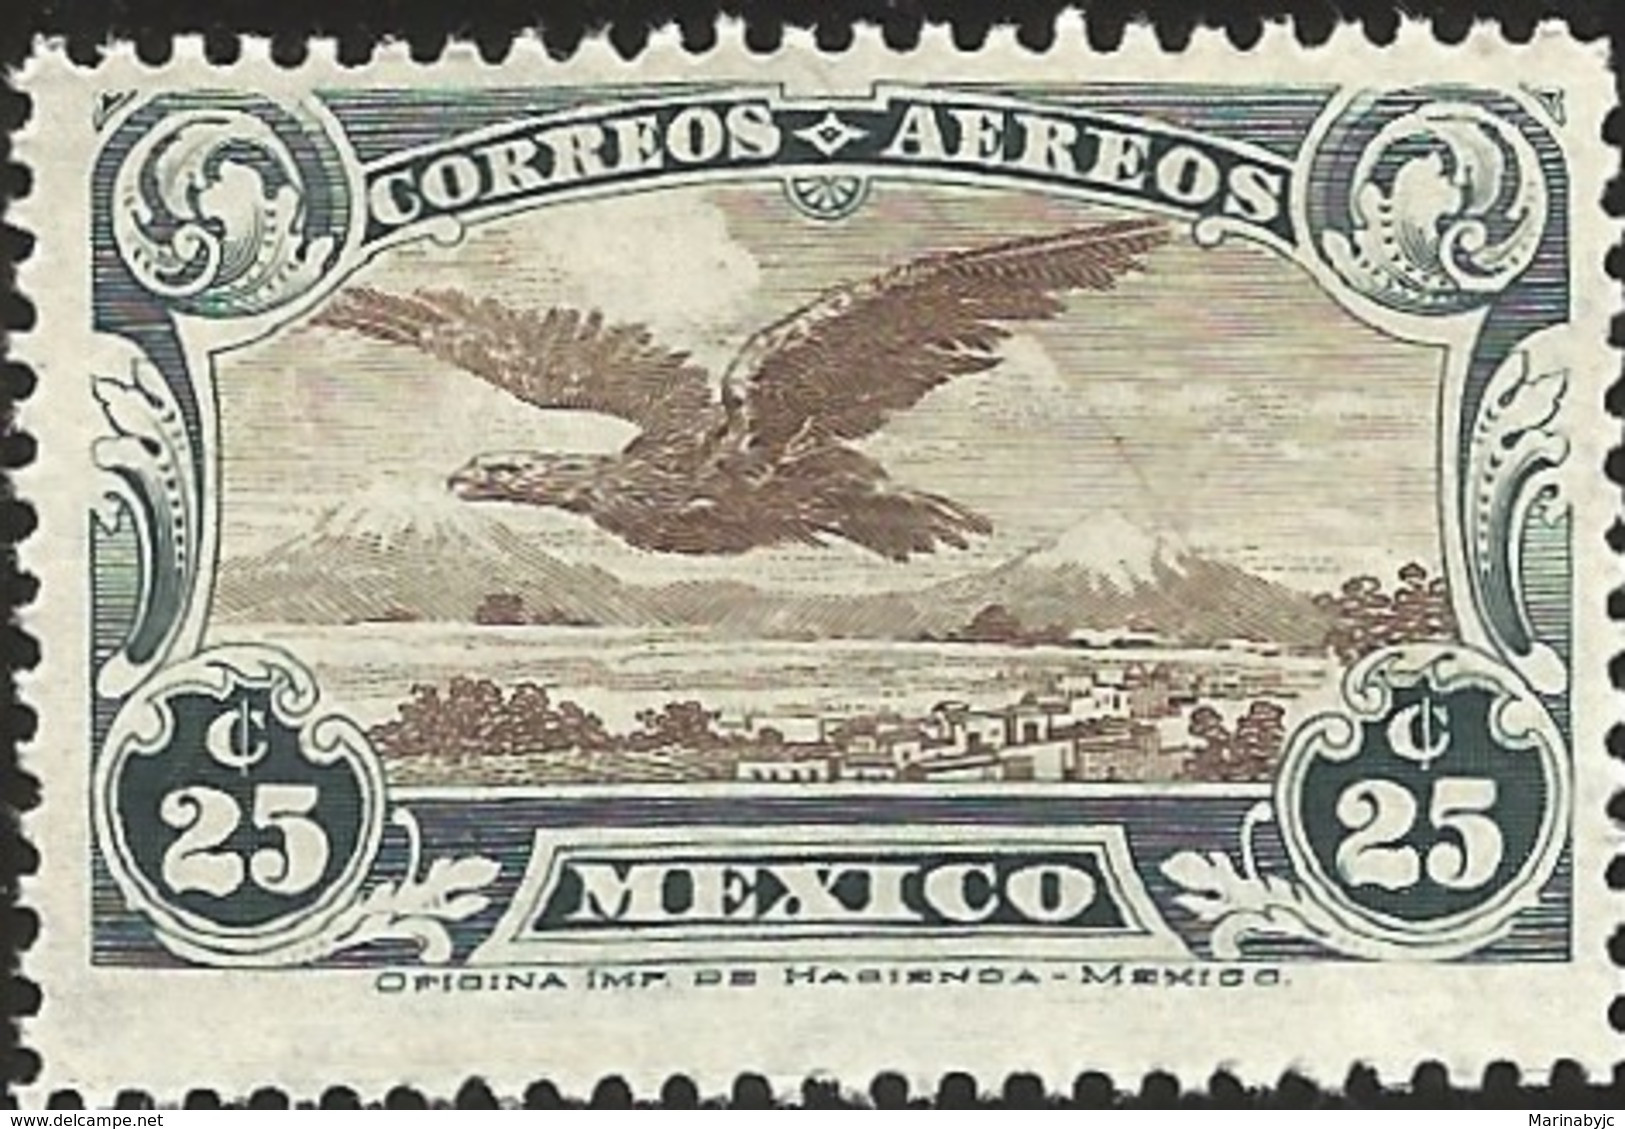 RJ) 1928 MEXICO, EAGLE FLYING OVER MOUNTAINS, SCOTT C4, MNH - Mexique